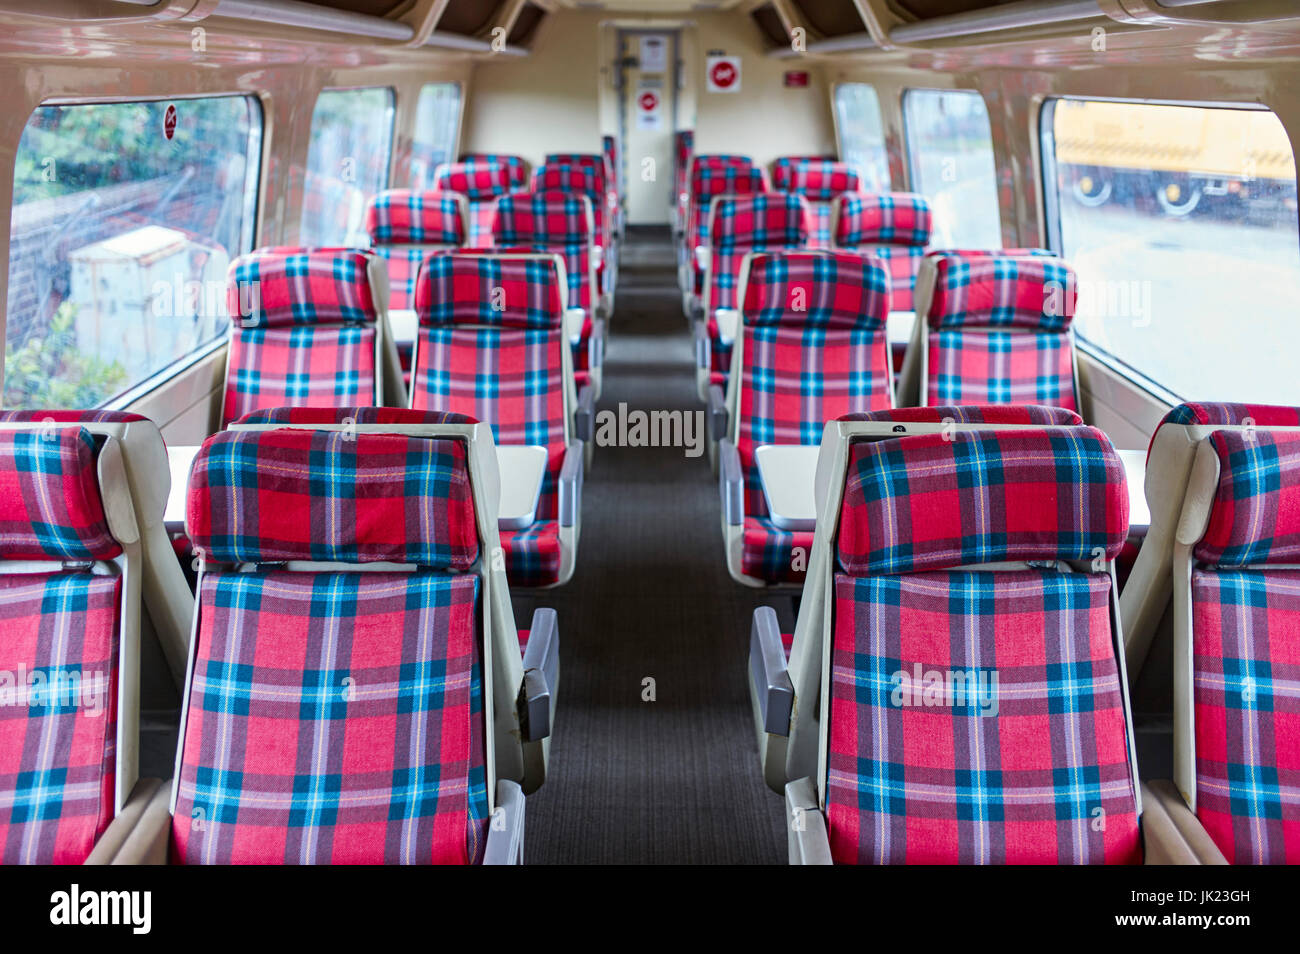 APT, advanced passenger train secondclass interior seating carriage Stock Photo